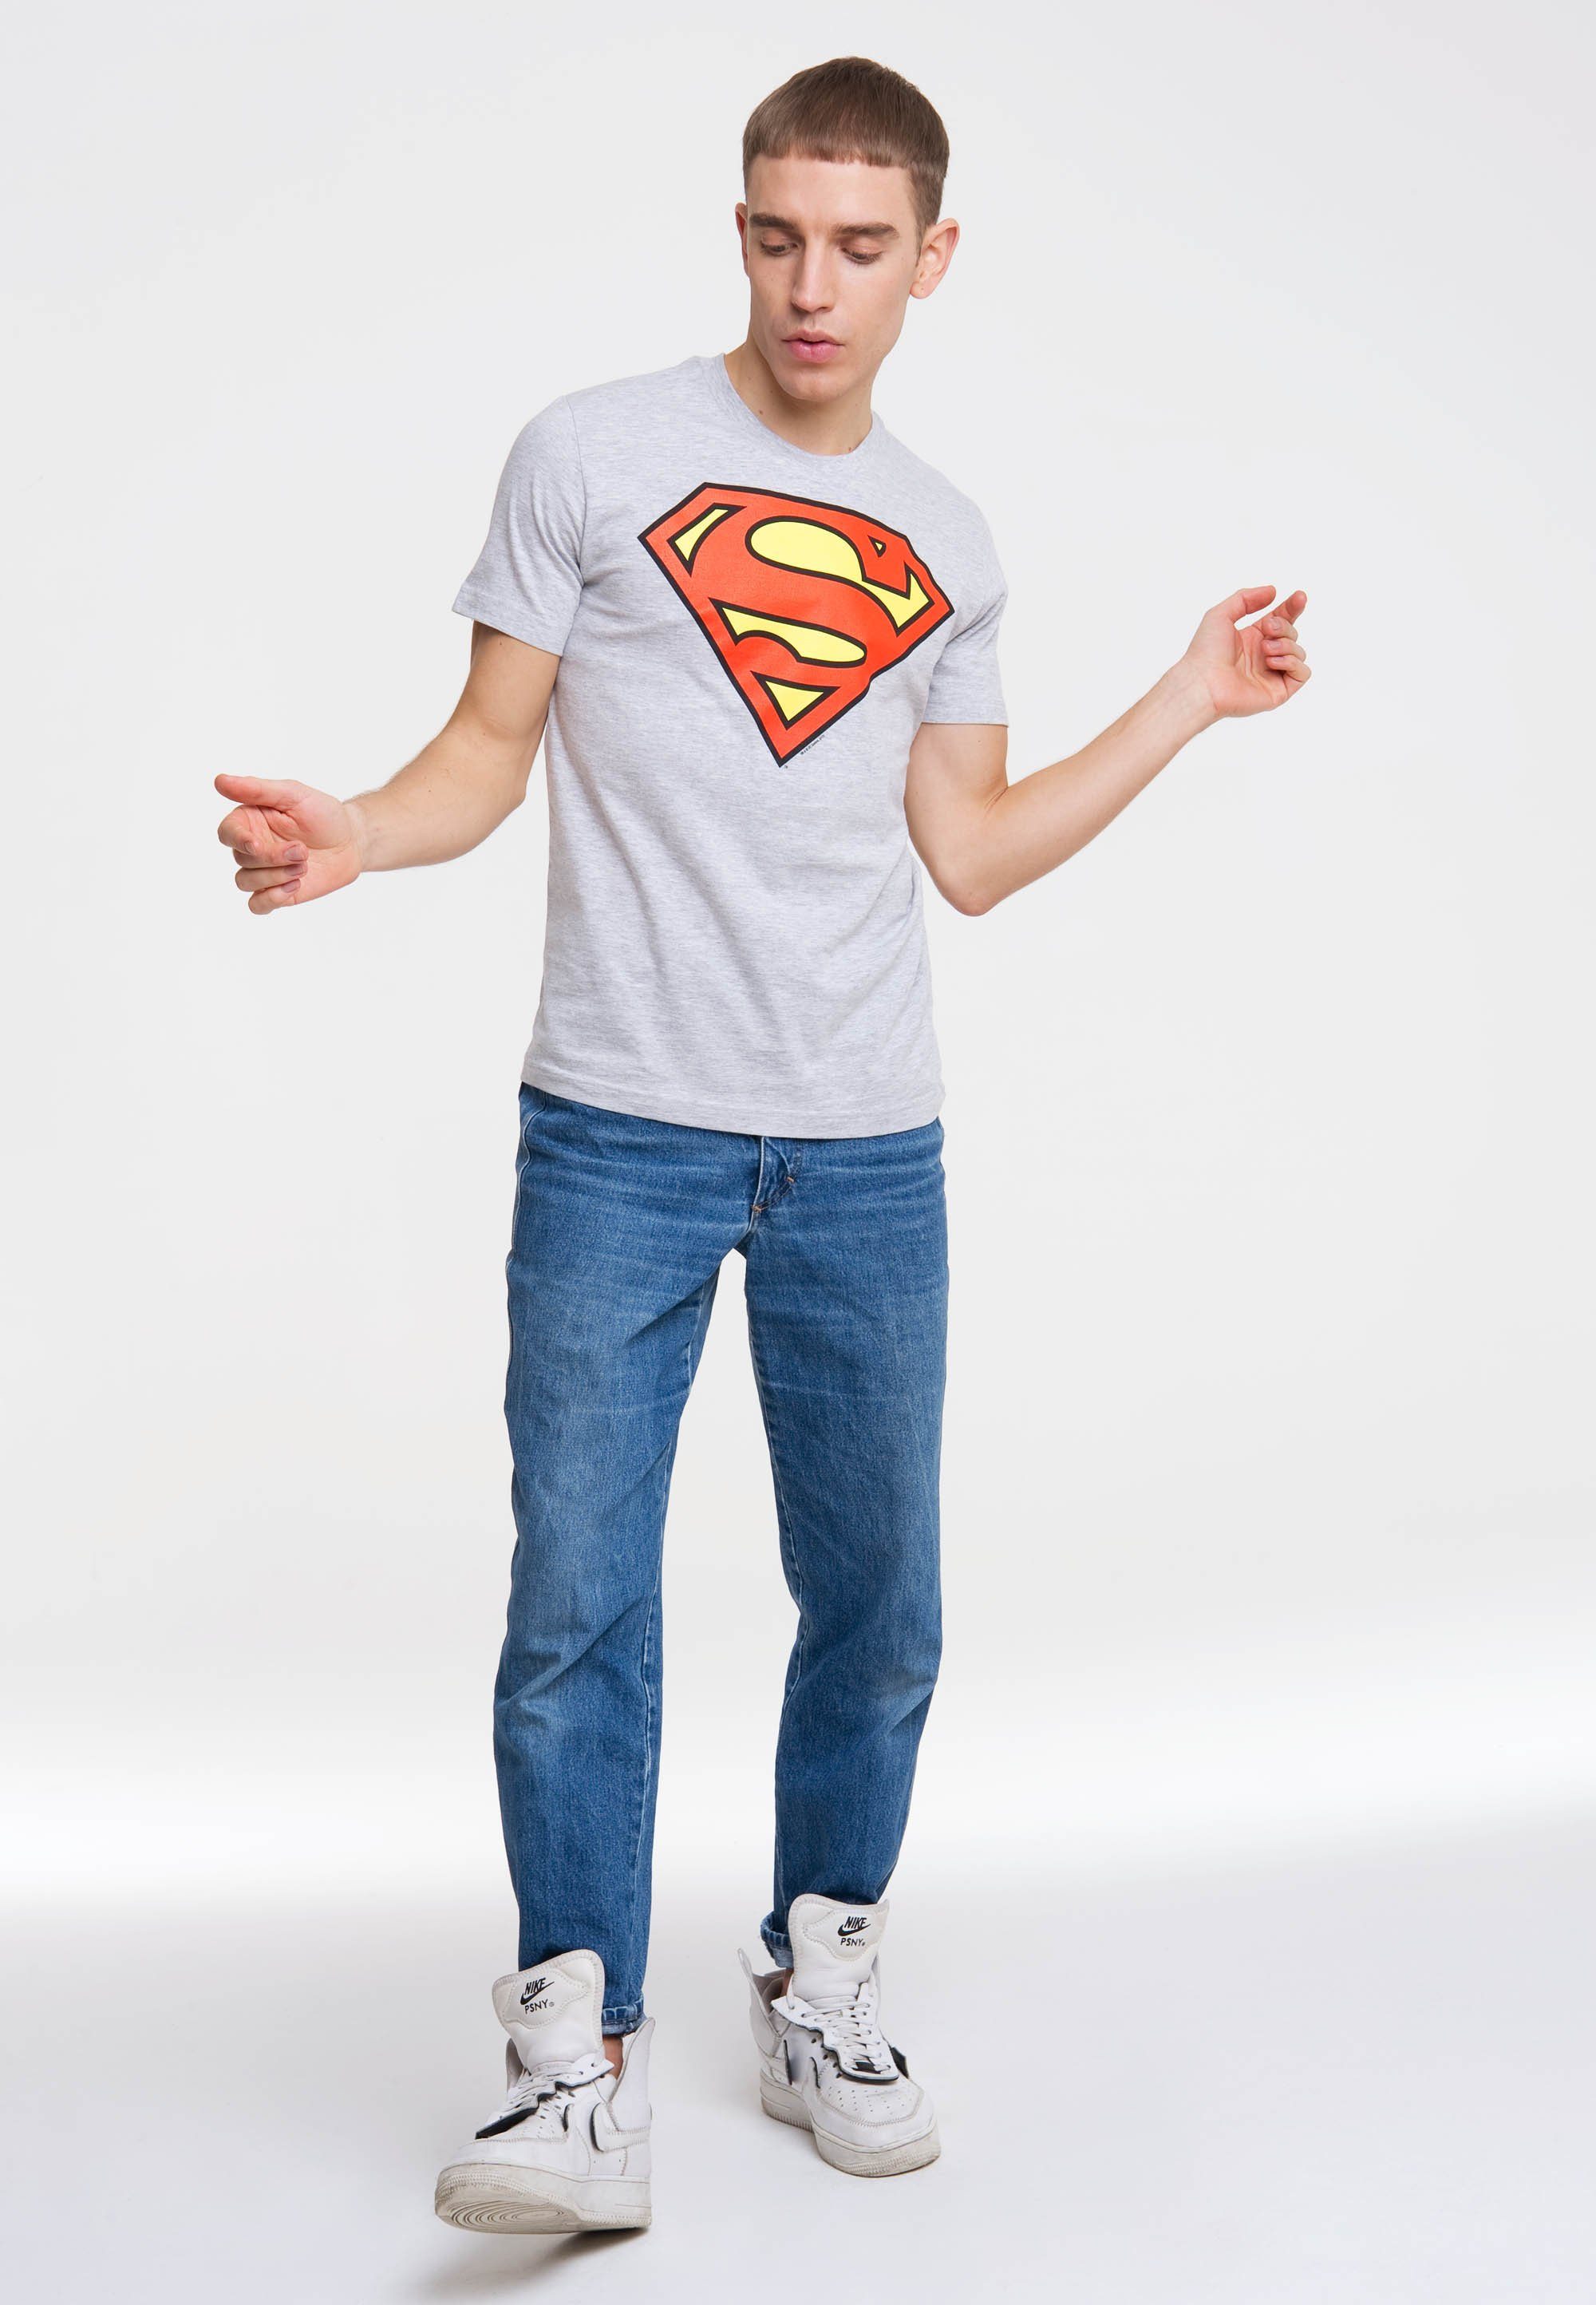 Rundhals-Ausschnitt LOGOSHIRT Bequeme klassischem mit - LOGO T-Shirt Superhelden-Logo, SUPERMAN dank Passform